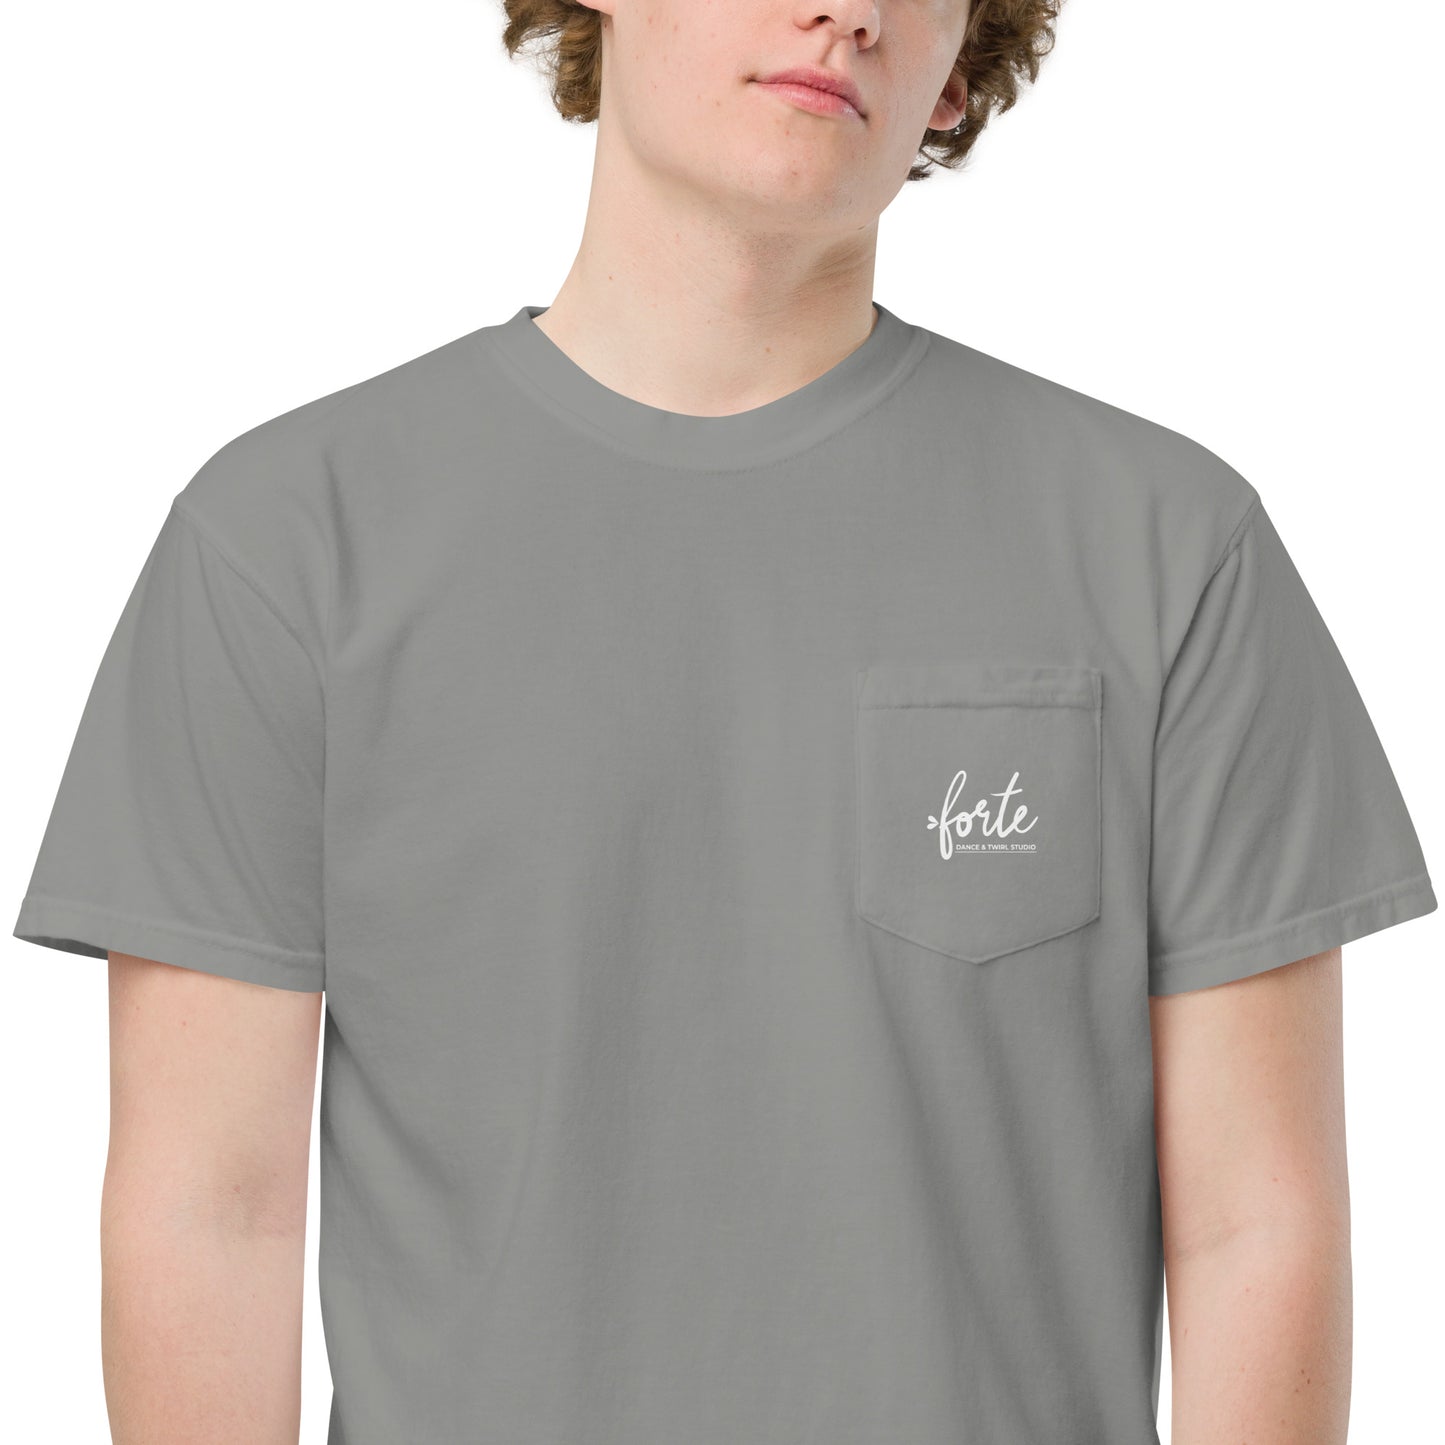 Adult - Comfort Colors unisex pocket t-shirt